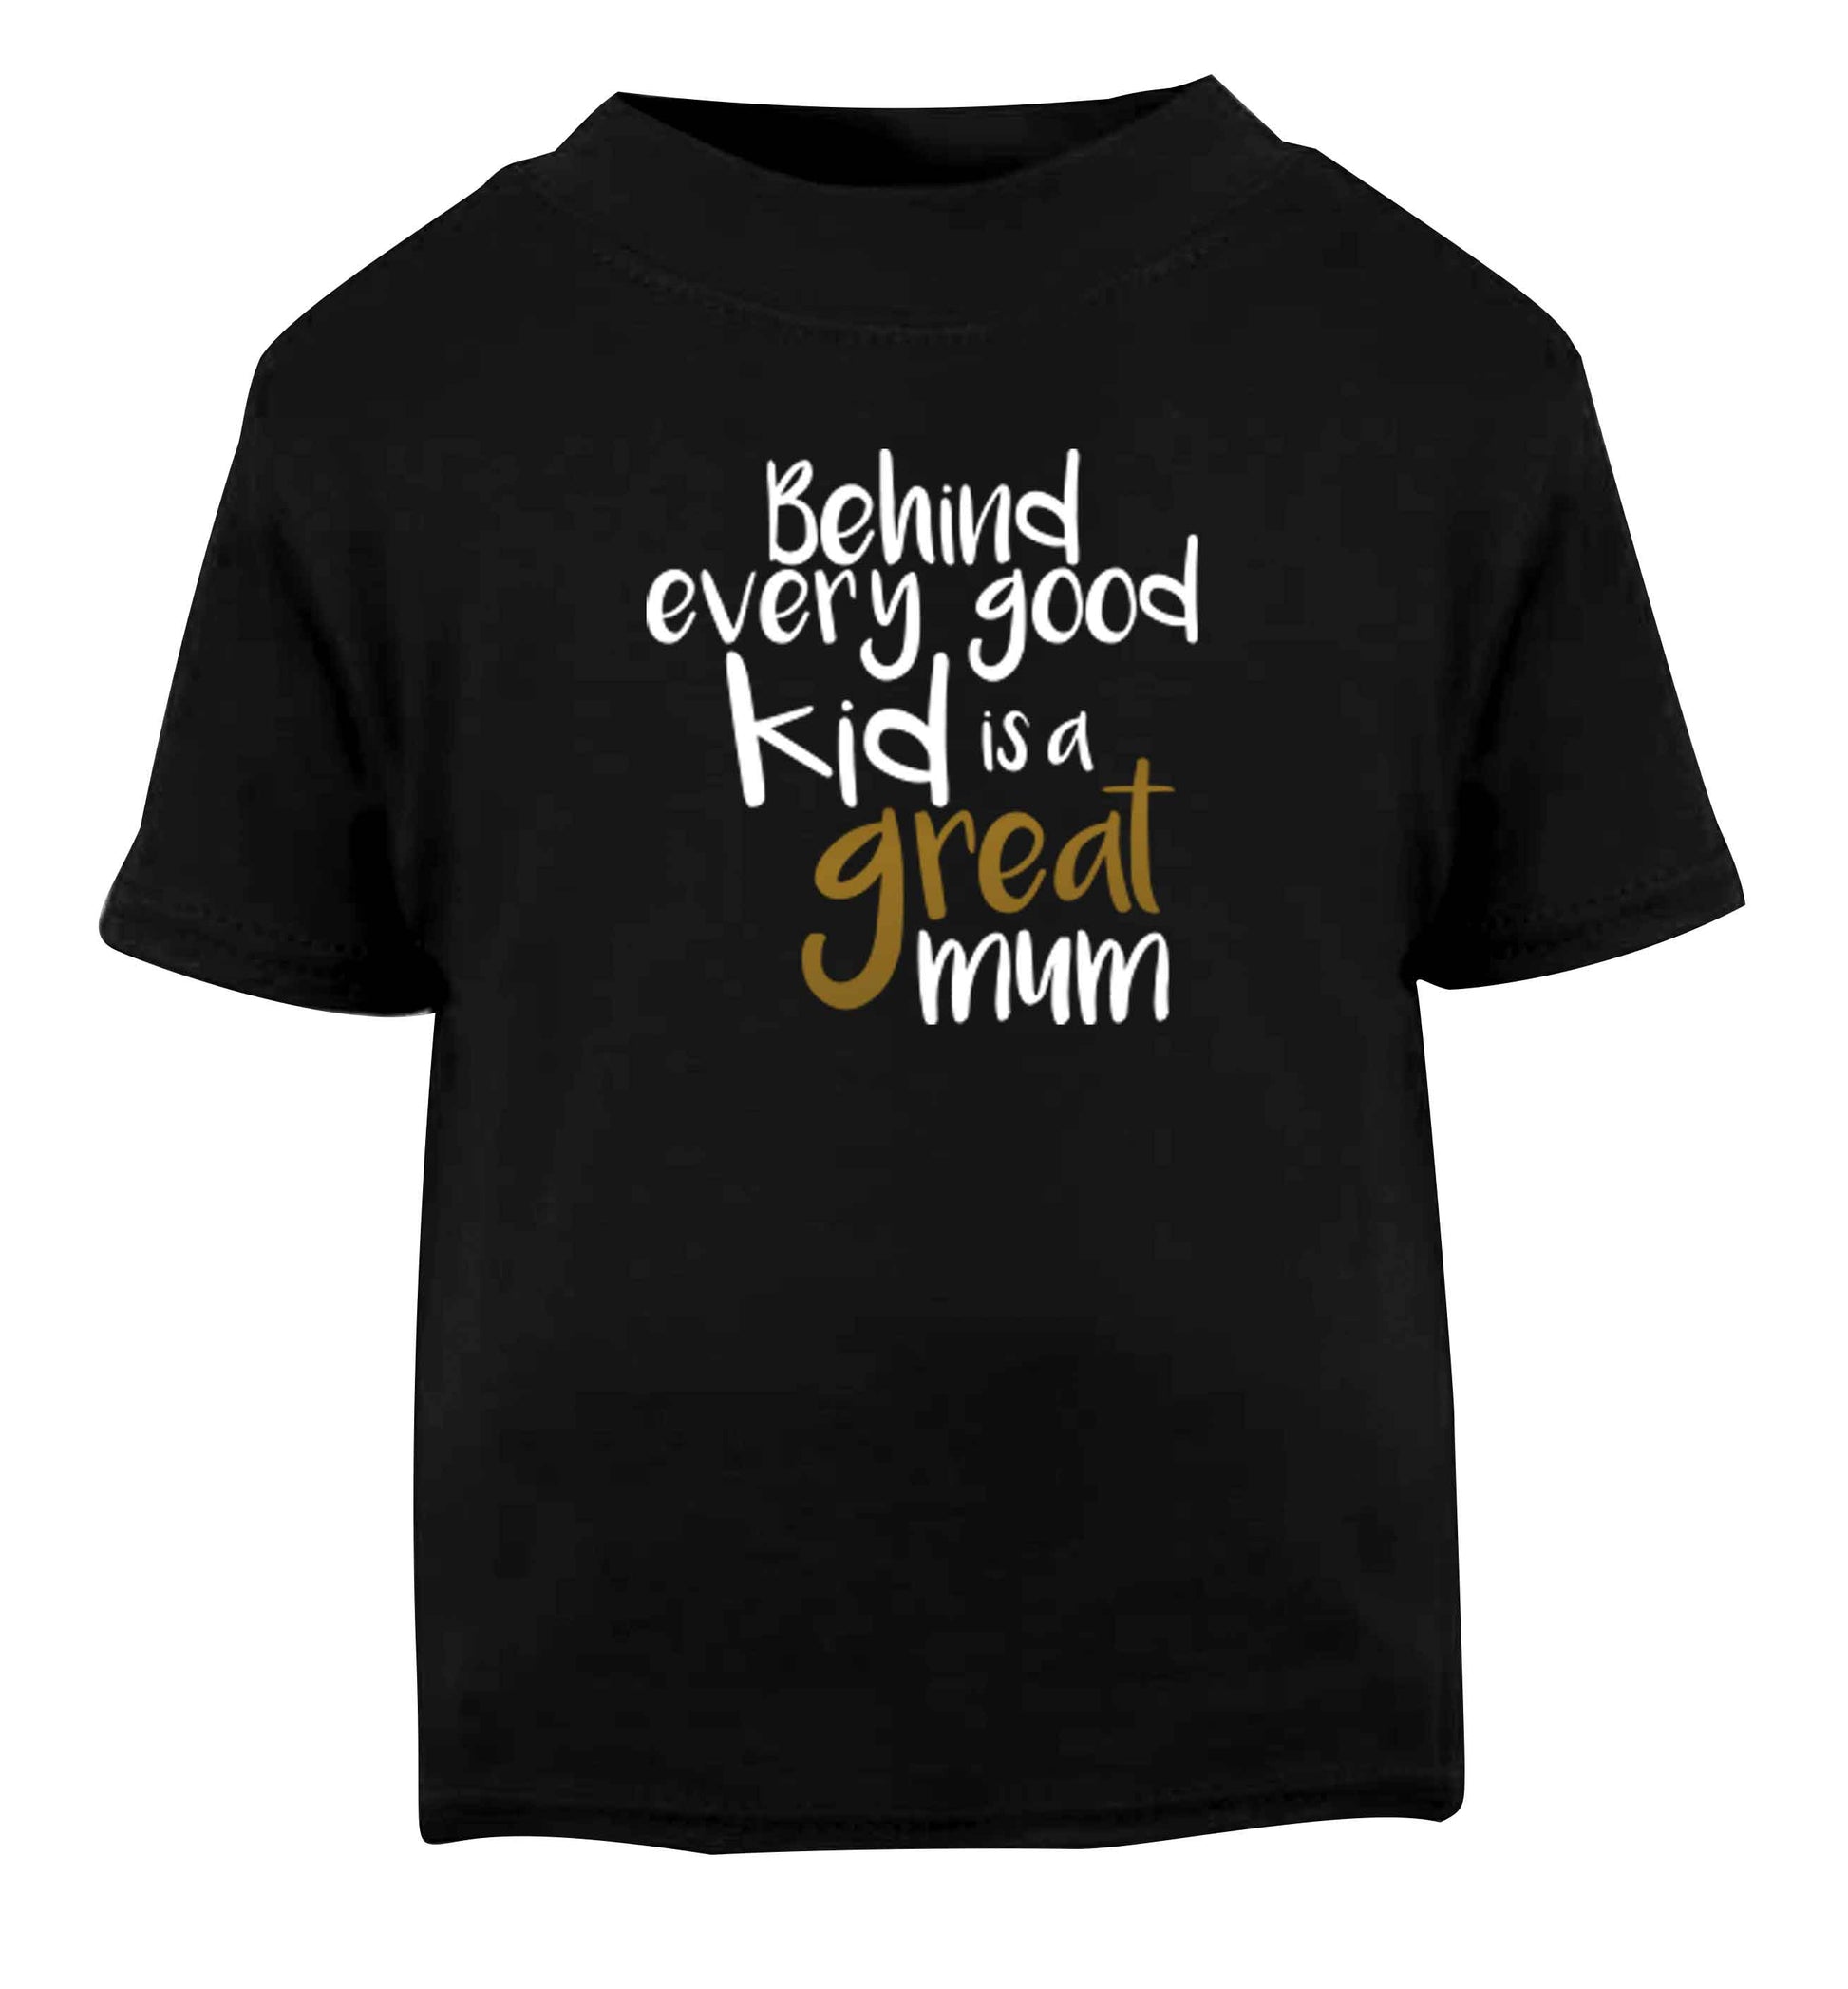 Behind every good kid is a great mum Black baby toddler Tshirt 2 years